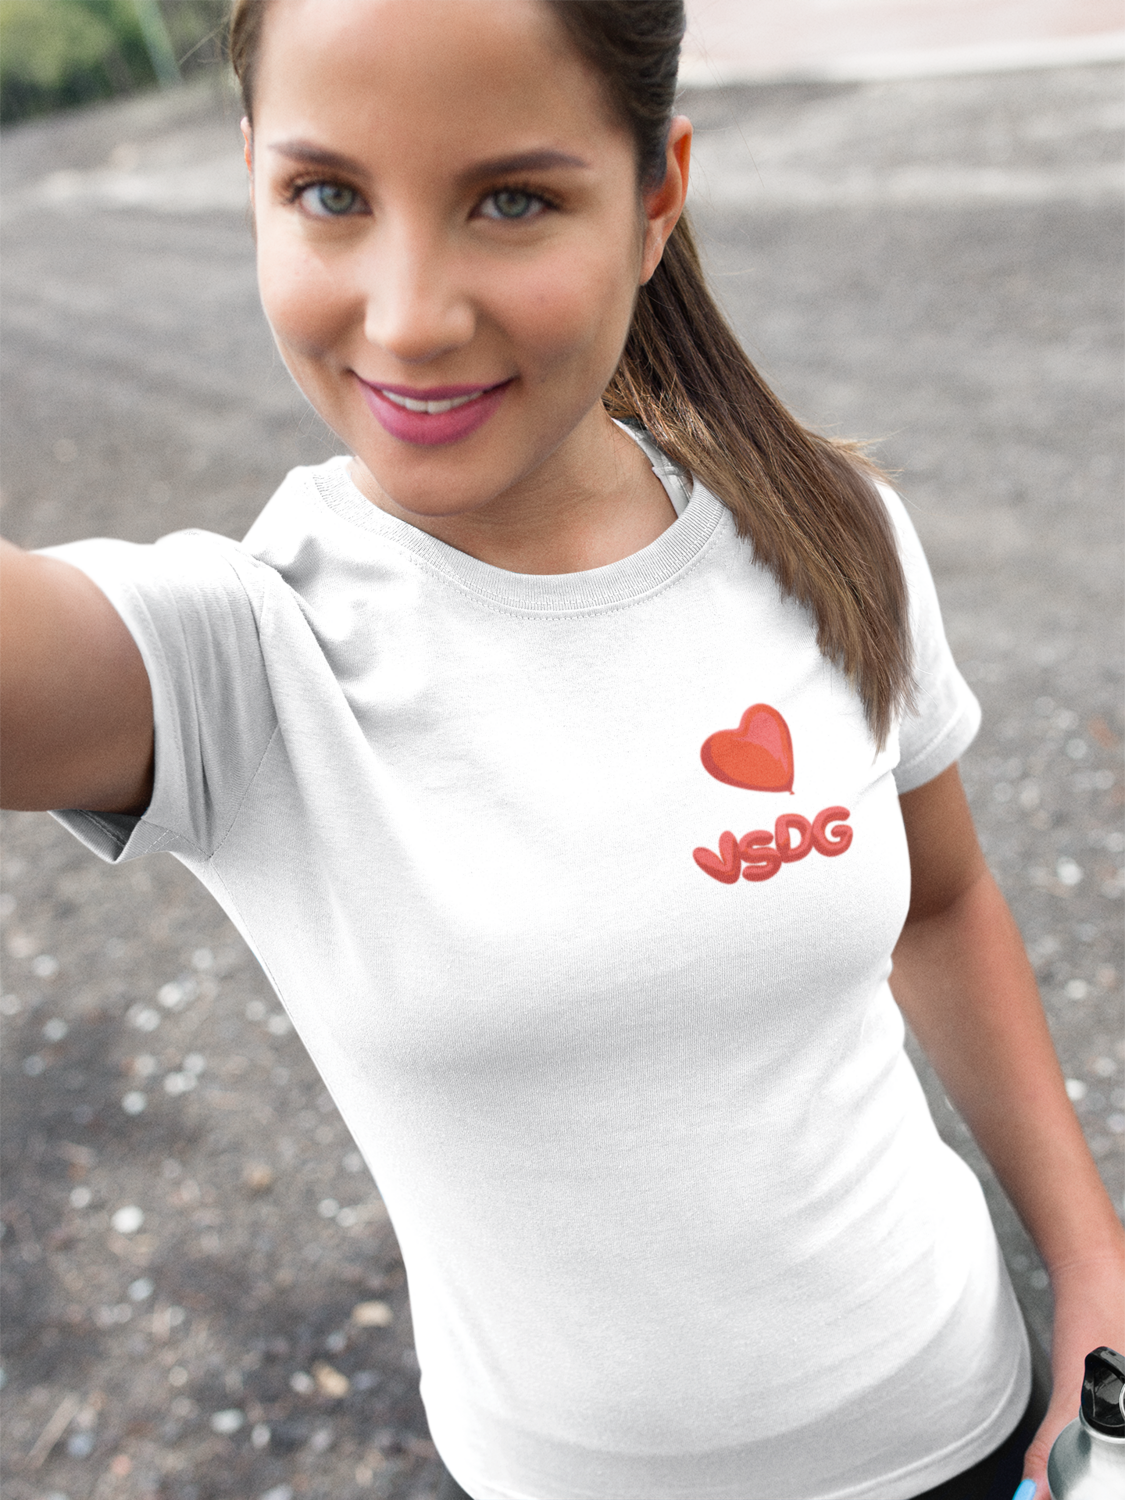 VSDG Herz Girlie Shirt (weiß)